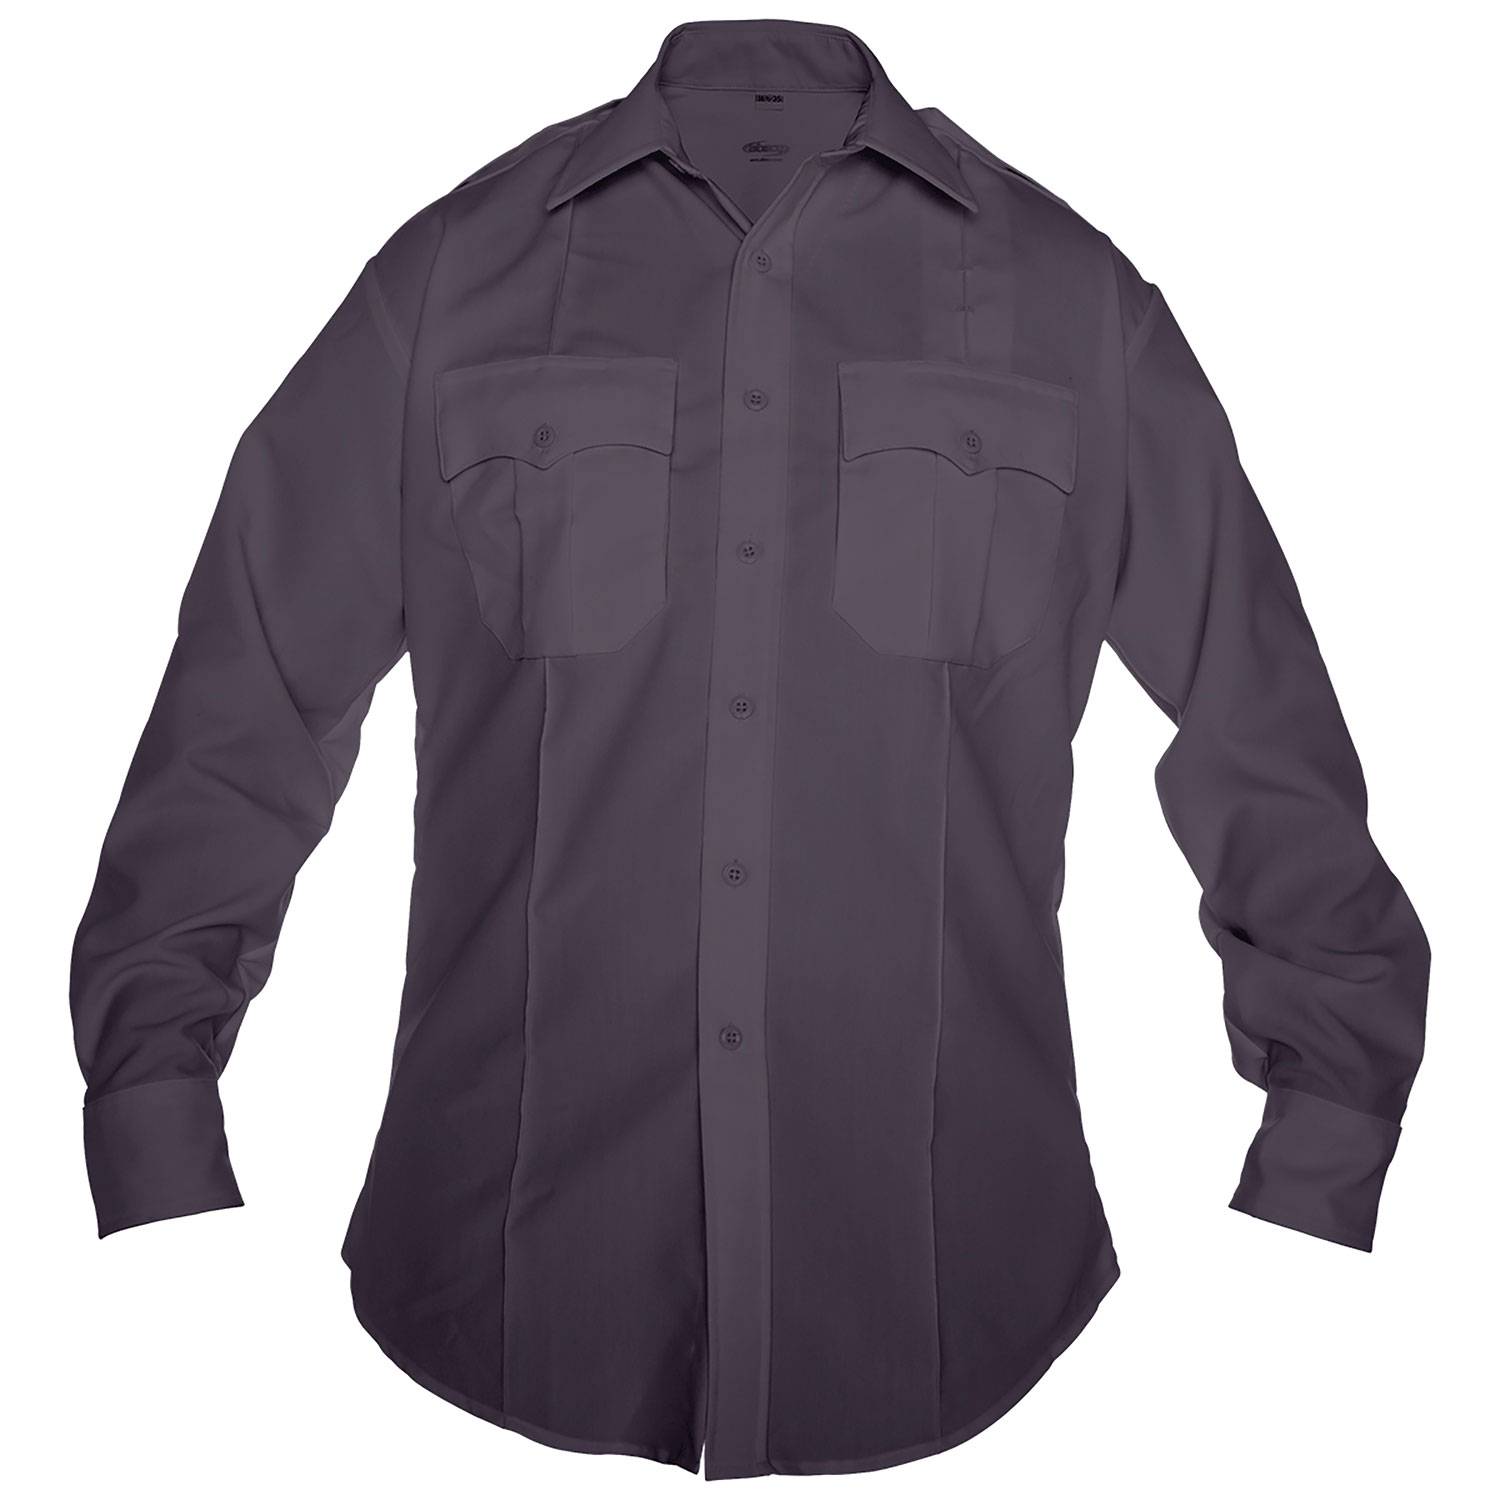 Elbeco Dutymaxx Long Sleeve Shirt with Zipper